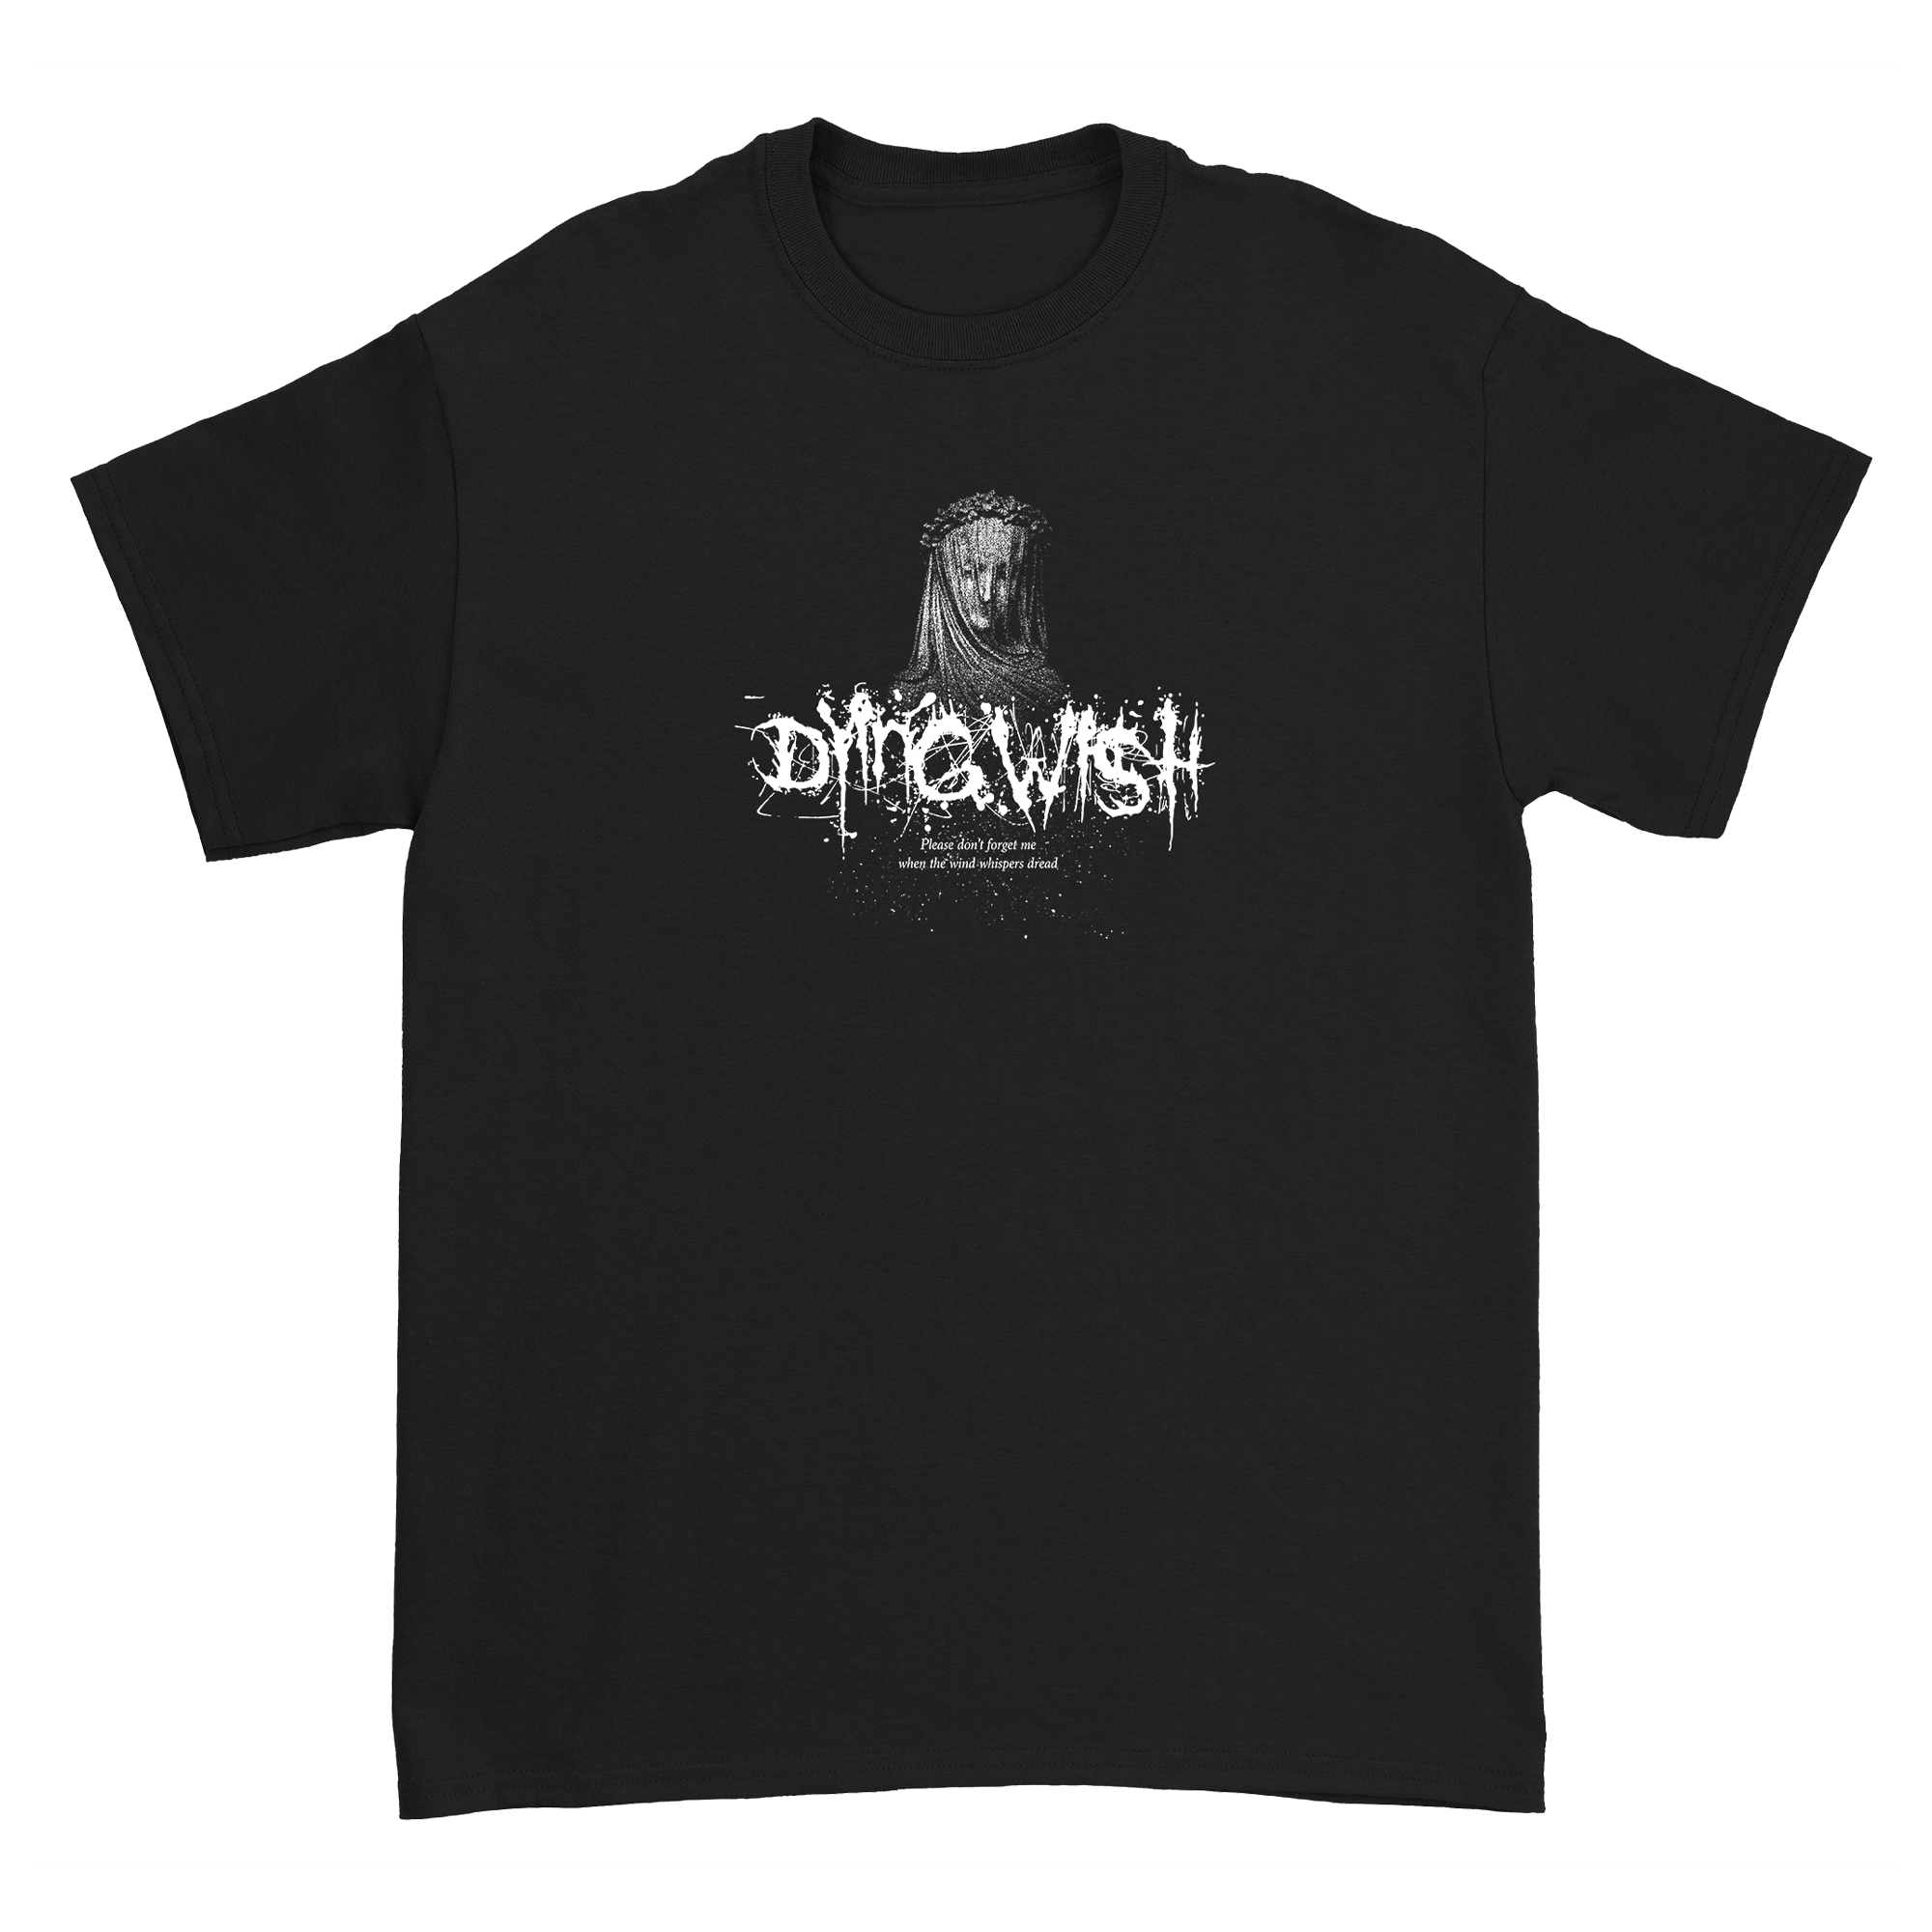 Dying Wish - Maiden T-Shirt